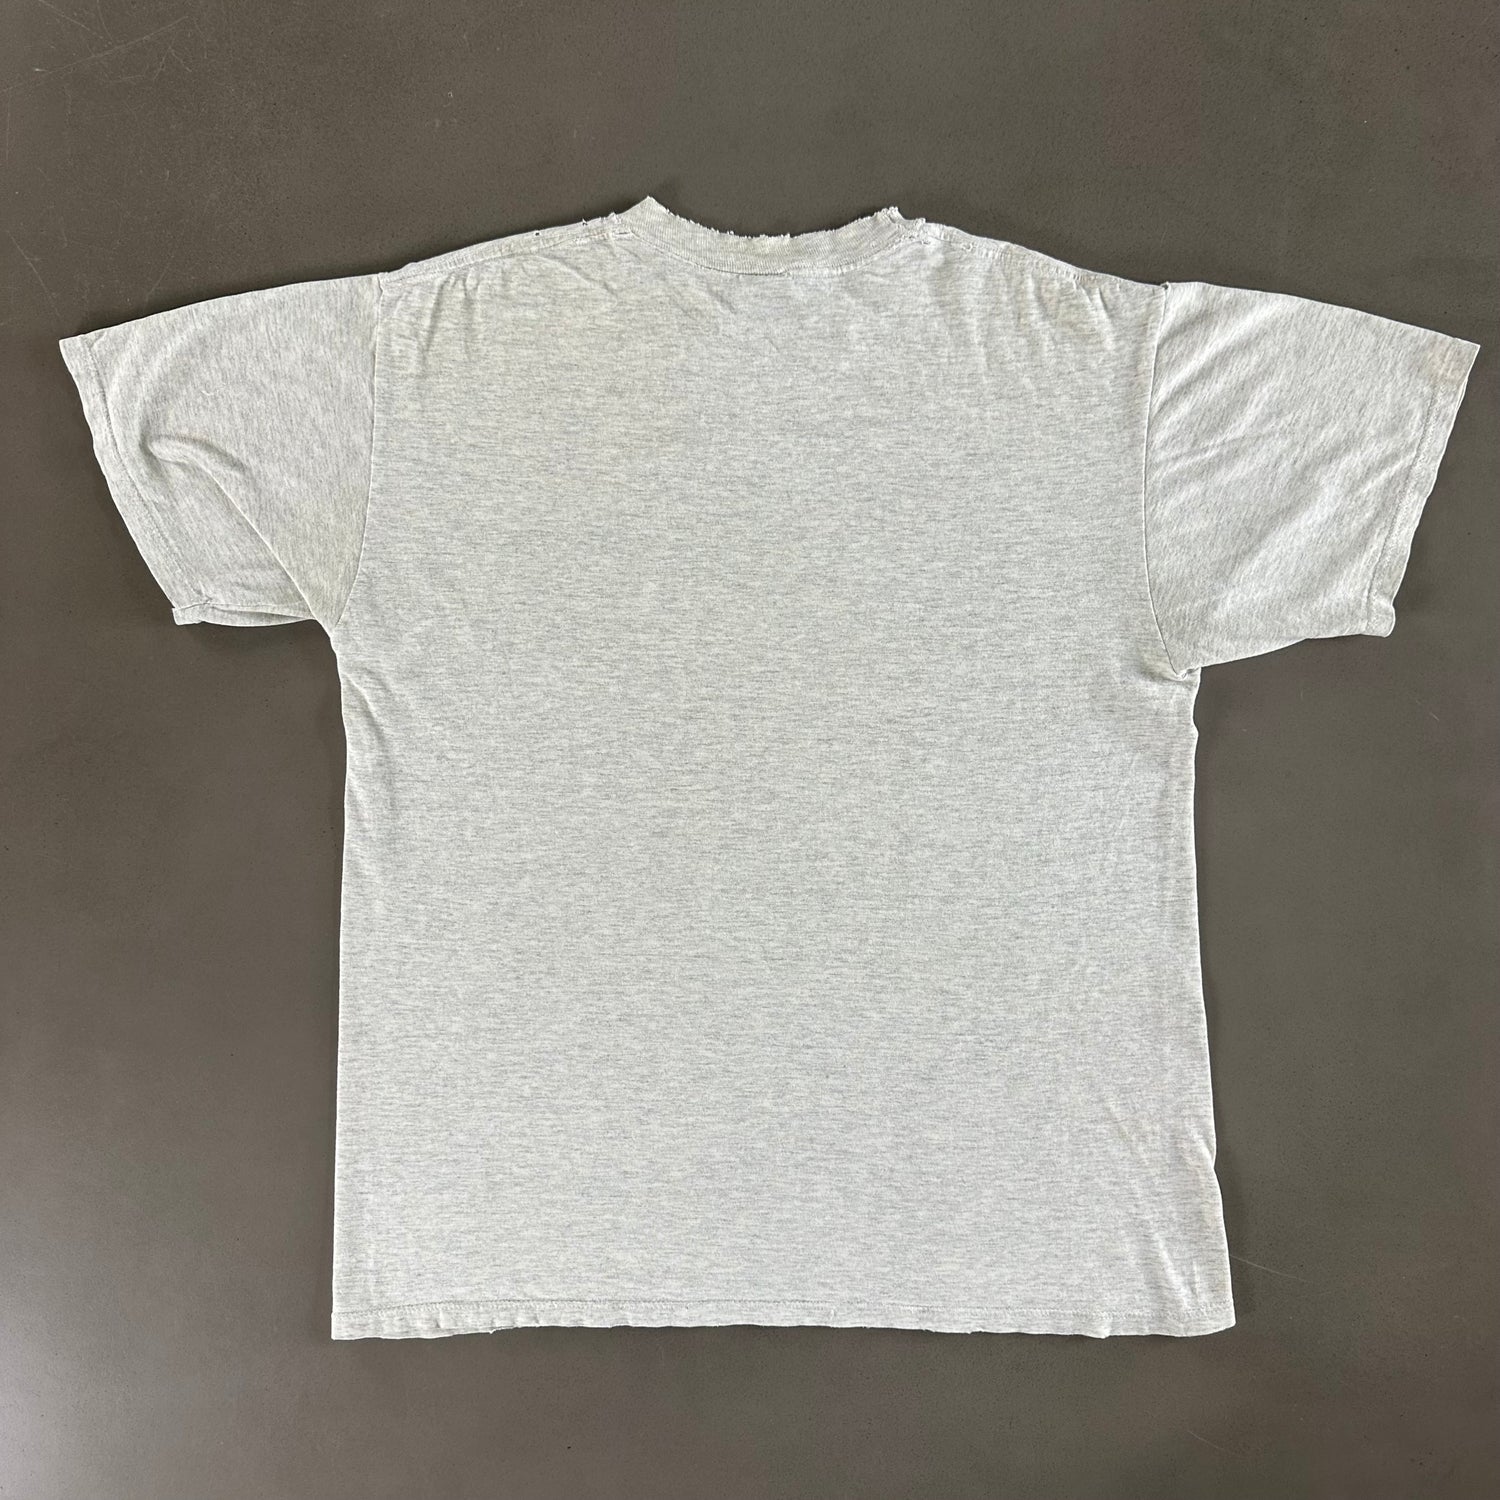 Vintage 1993 University of Kentucky T-shirt size Large